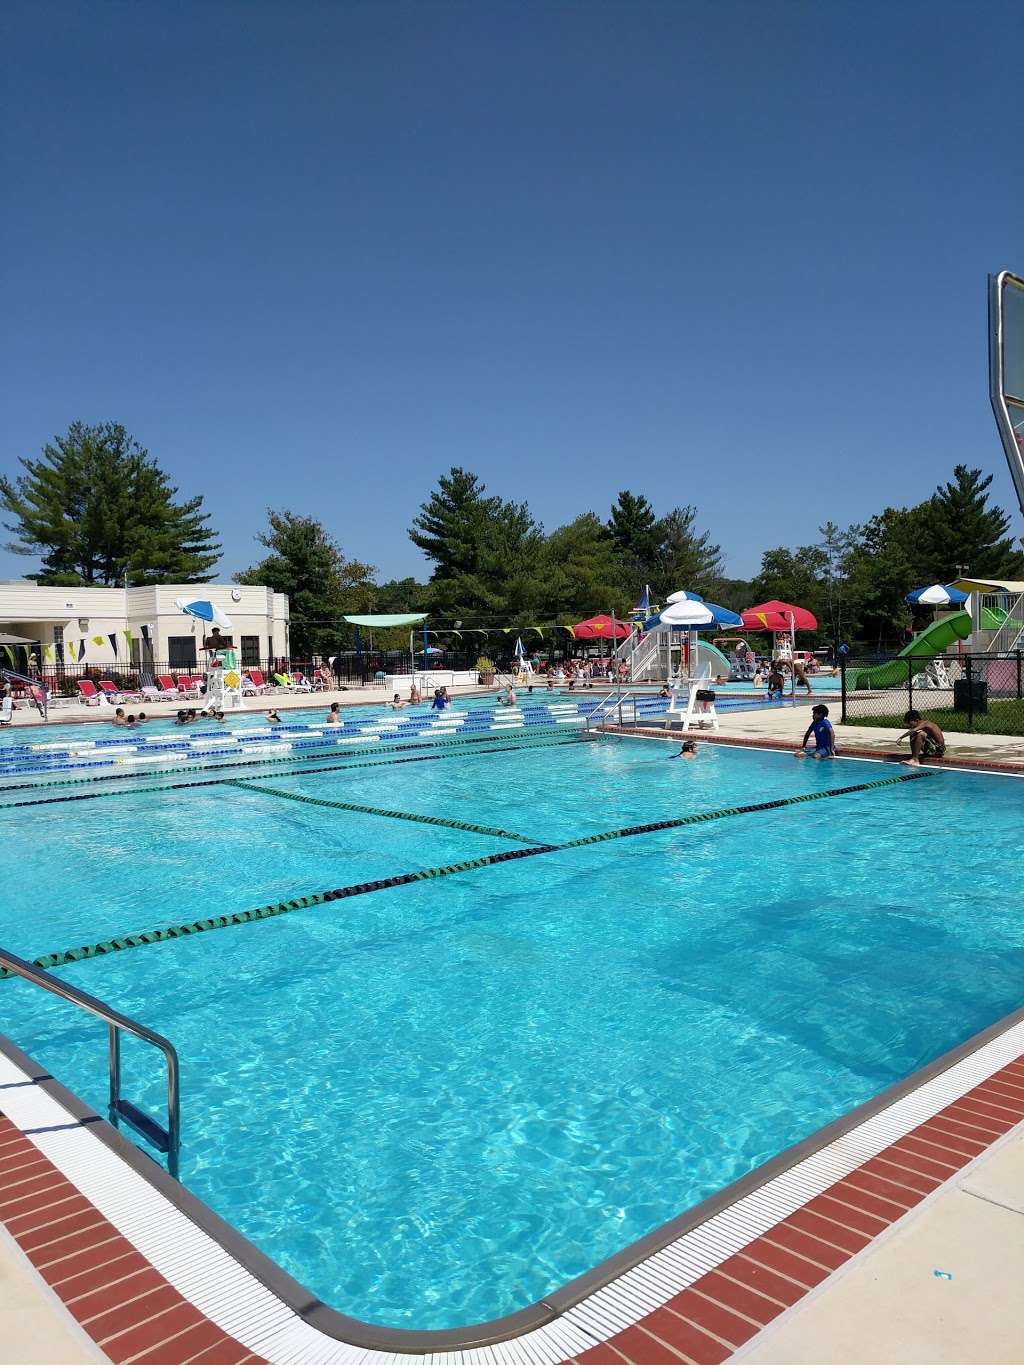 Ellen E Linson Swimming Pool | Parkway, 5211 Paint Branch Dr, College Park, MD 20740 | Phone: (301) 277-3719